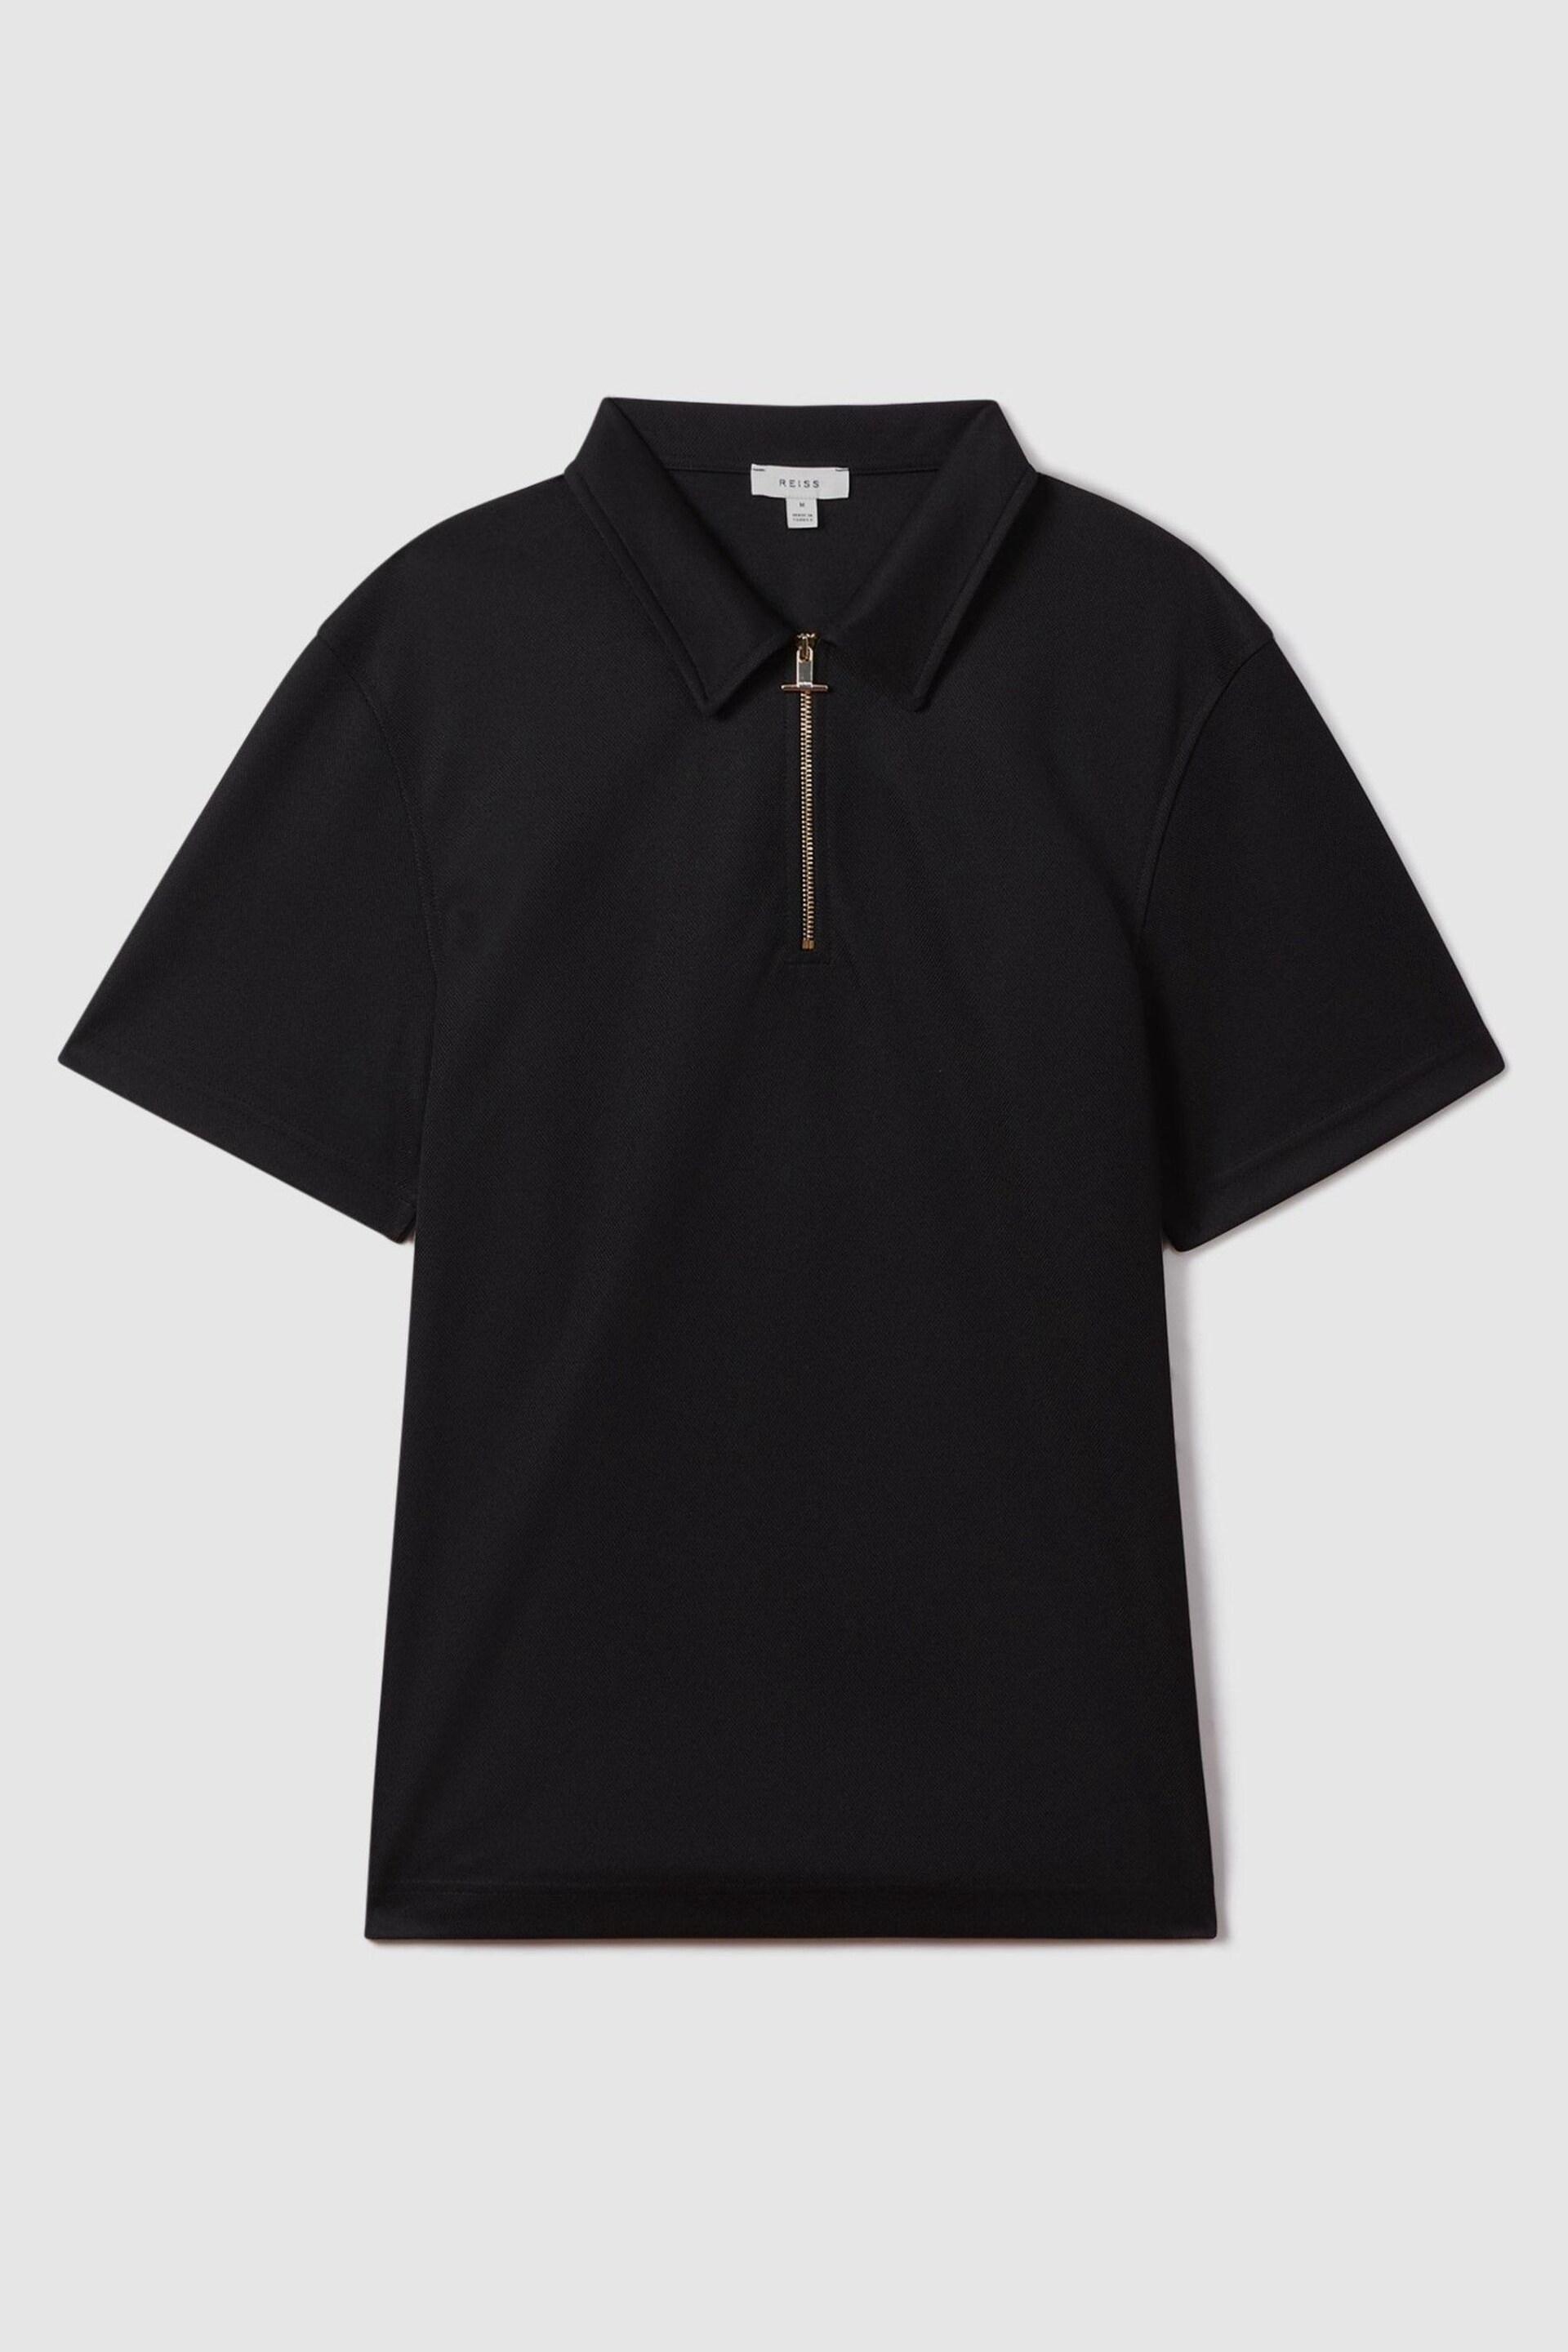 Reiss Black Floyd Slim Fit Half-Zip Polo Shirt - Image 2 of 6